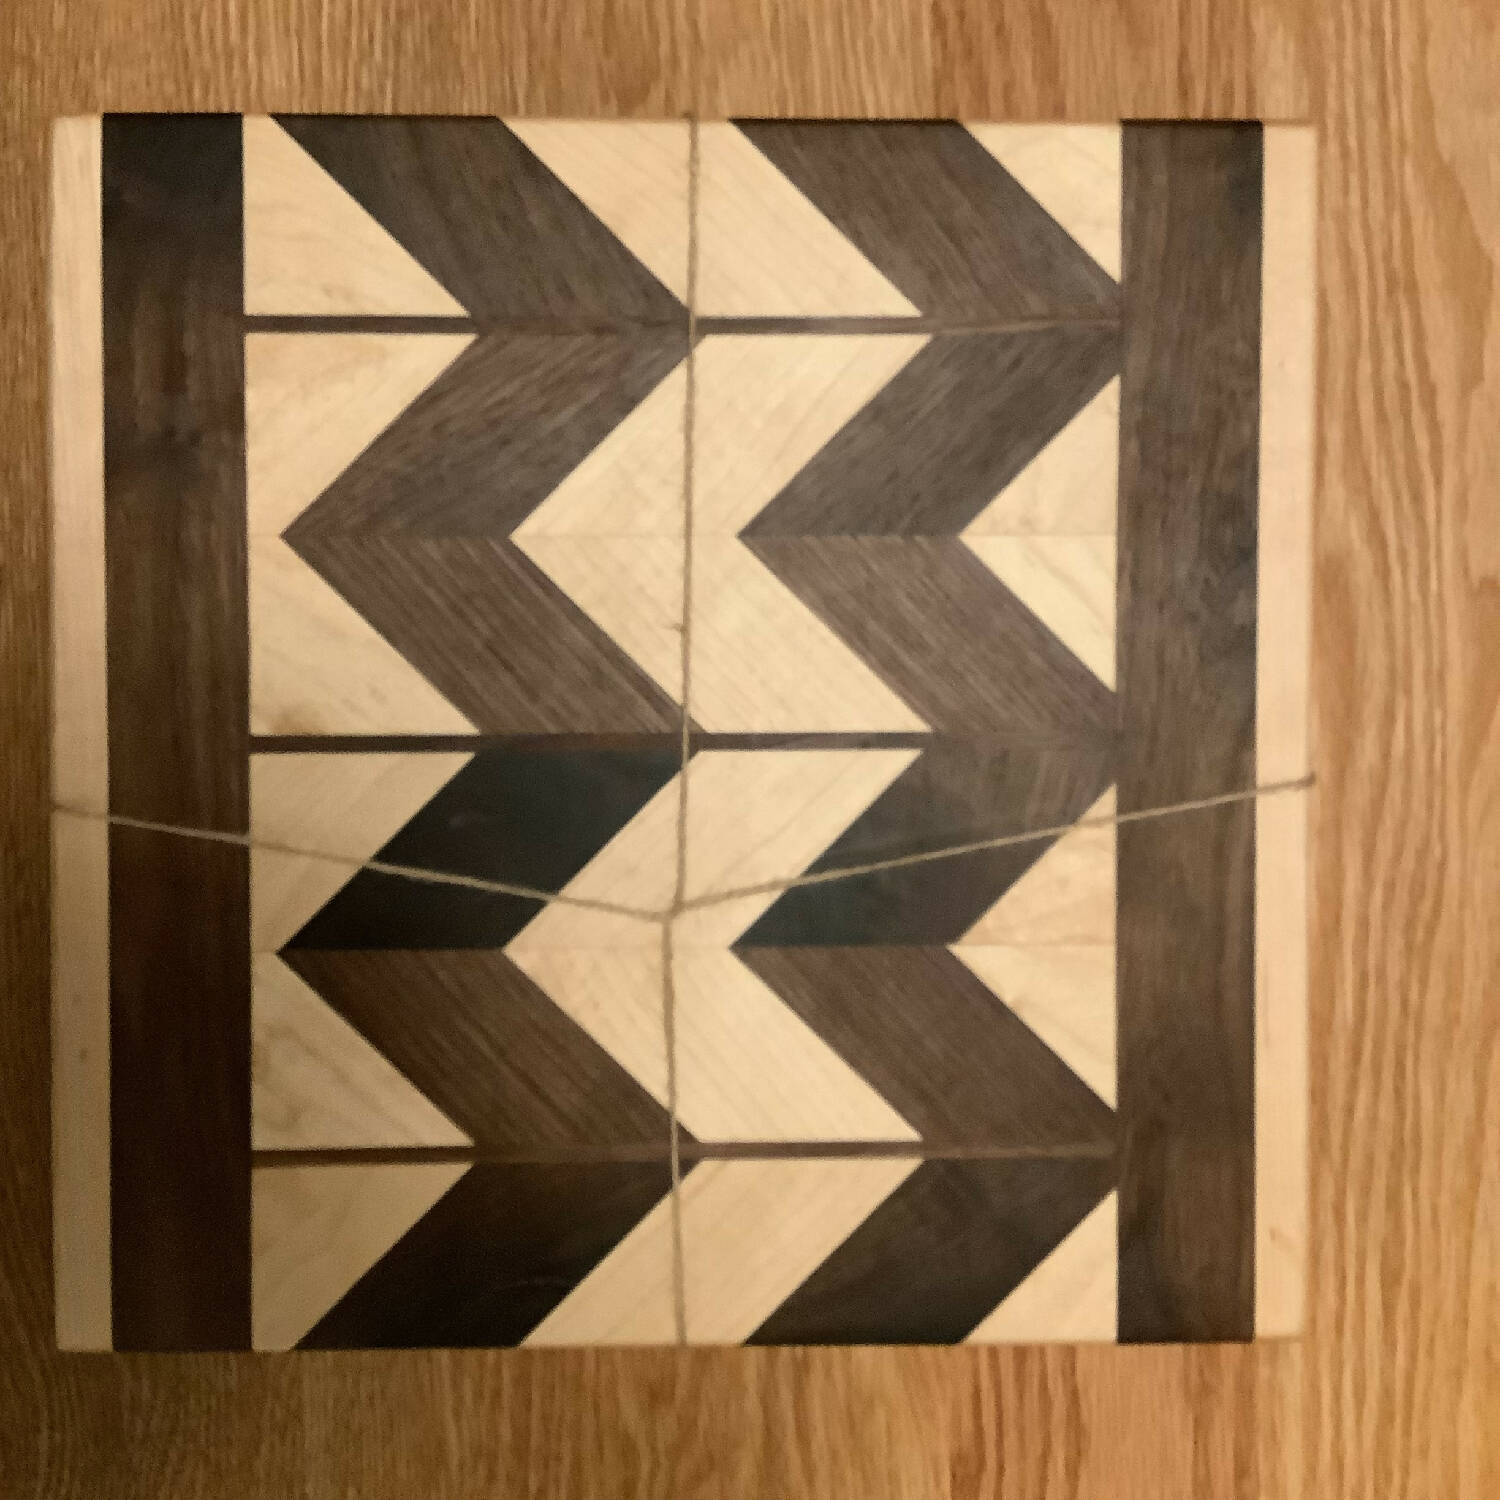 12”x12” chevron pattern maple and walnut cutting board